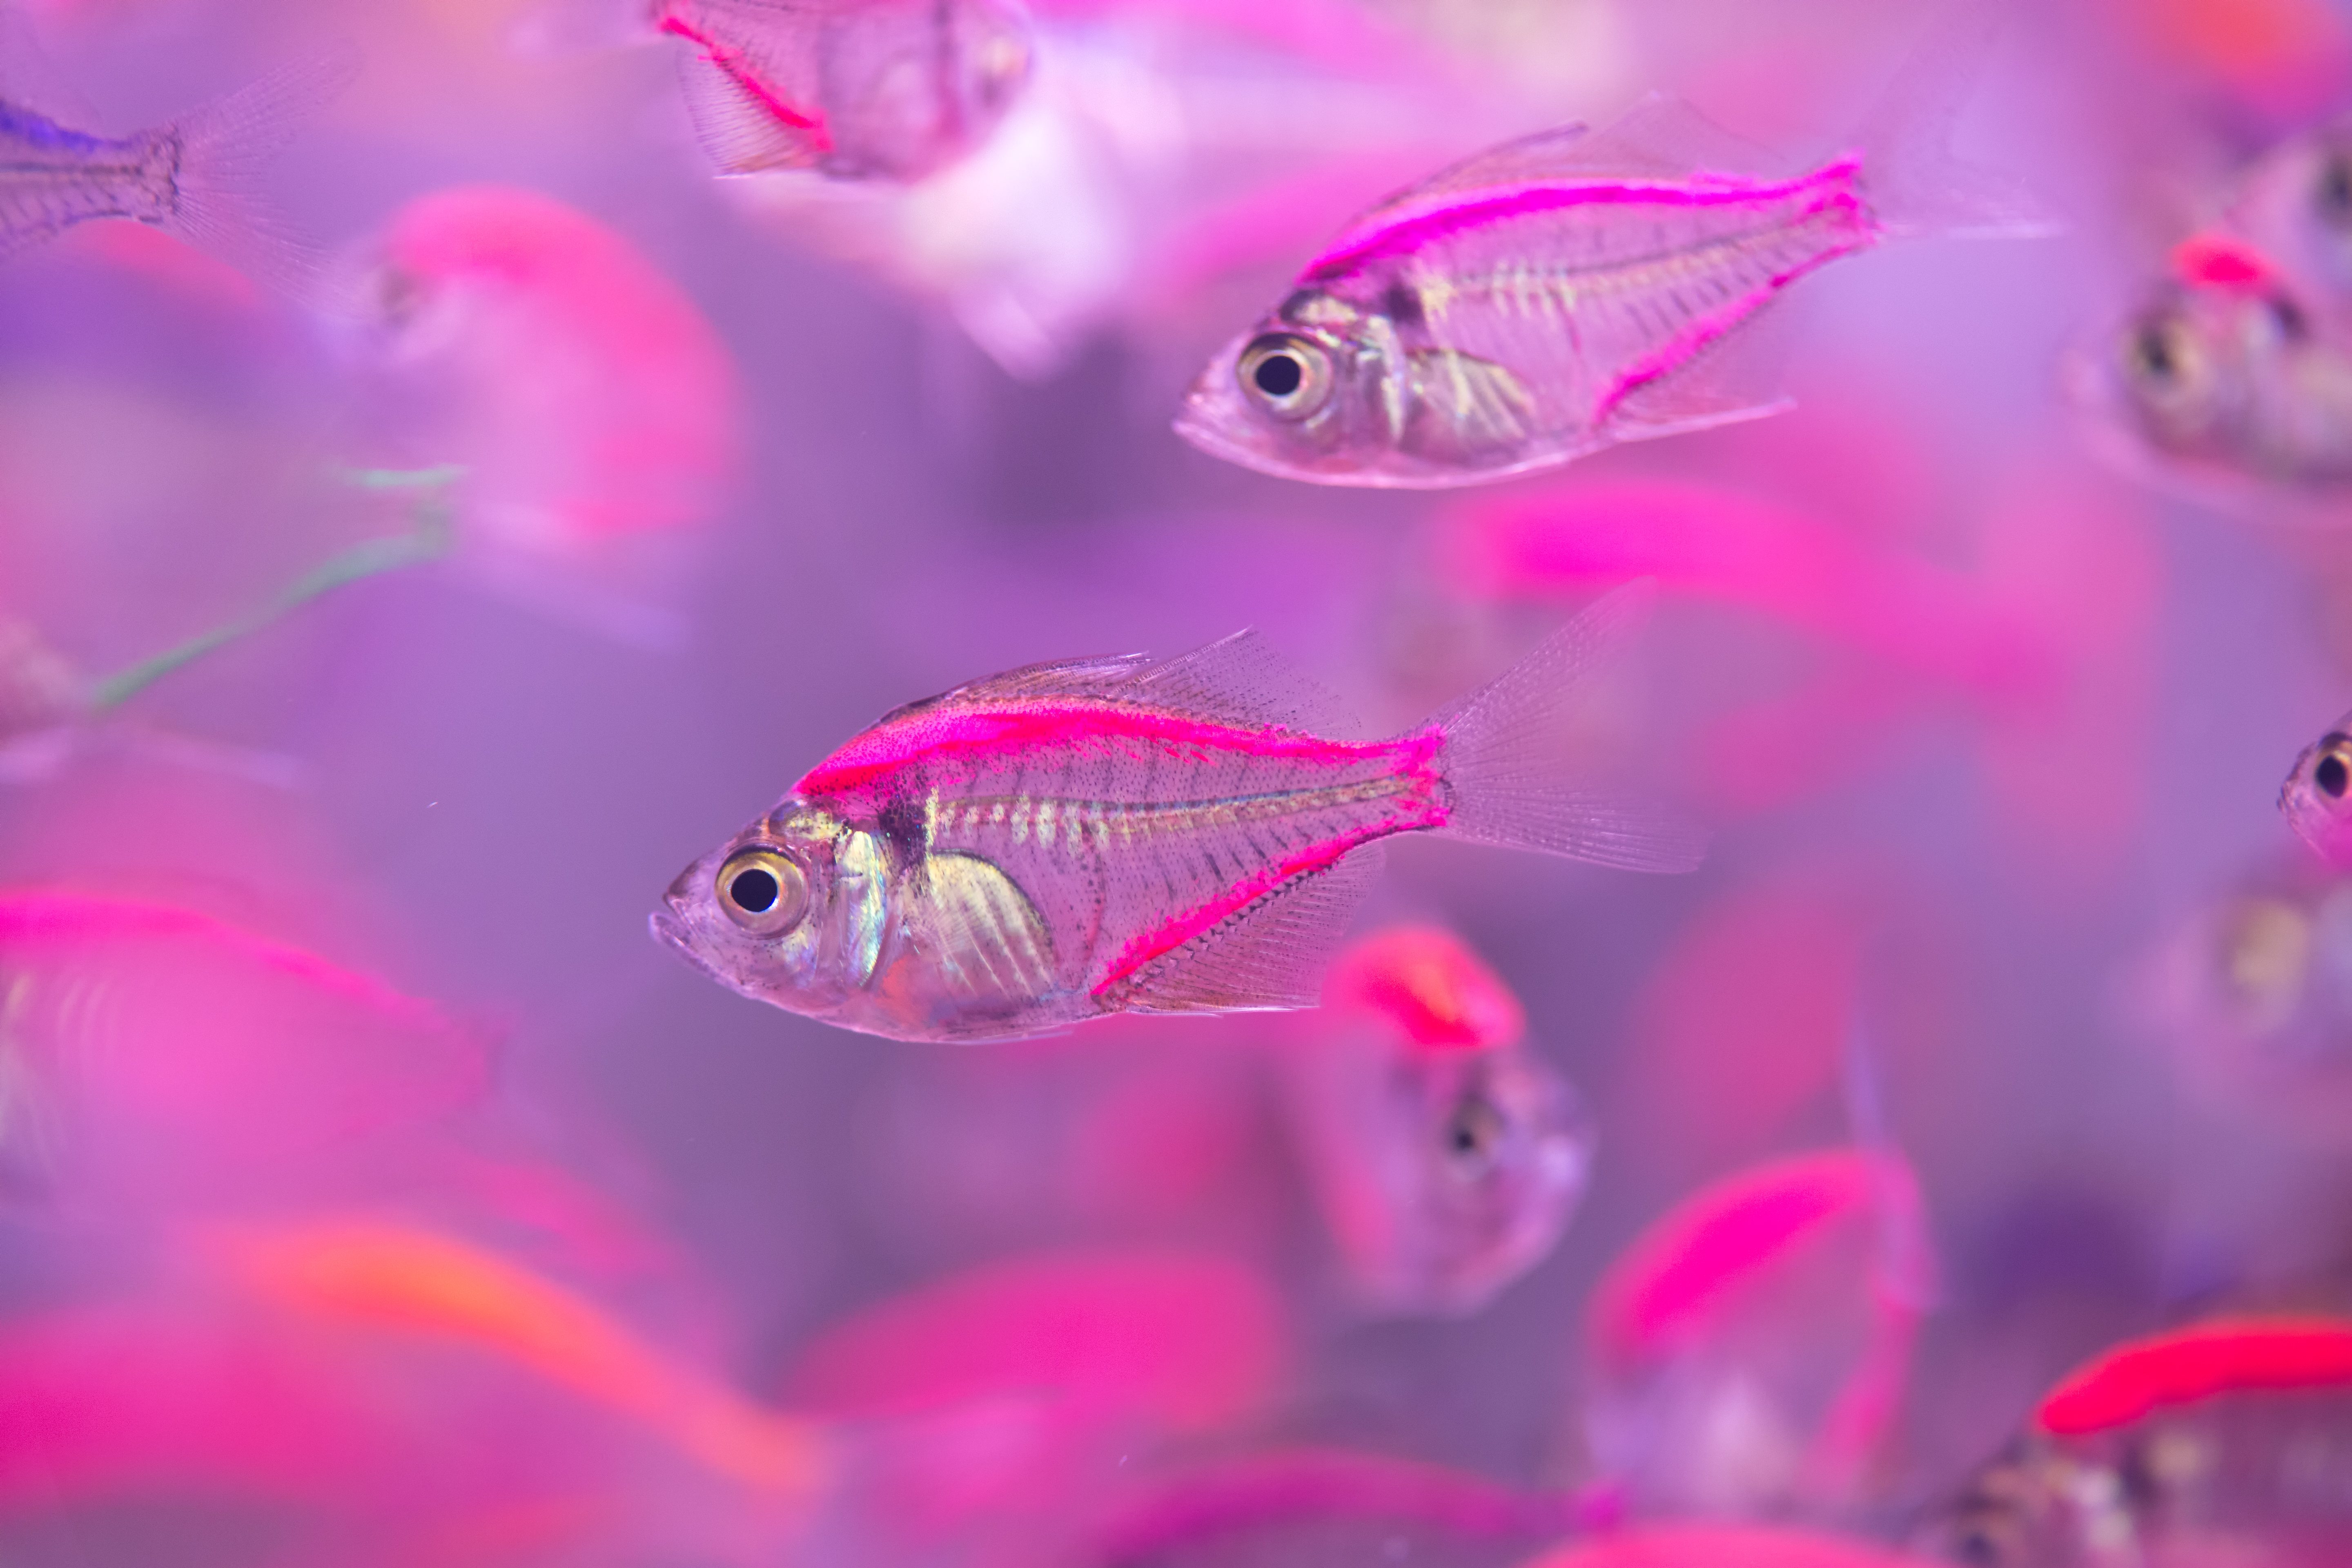 Underwater Fish Photography